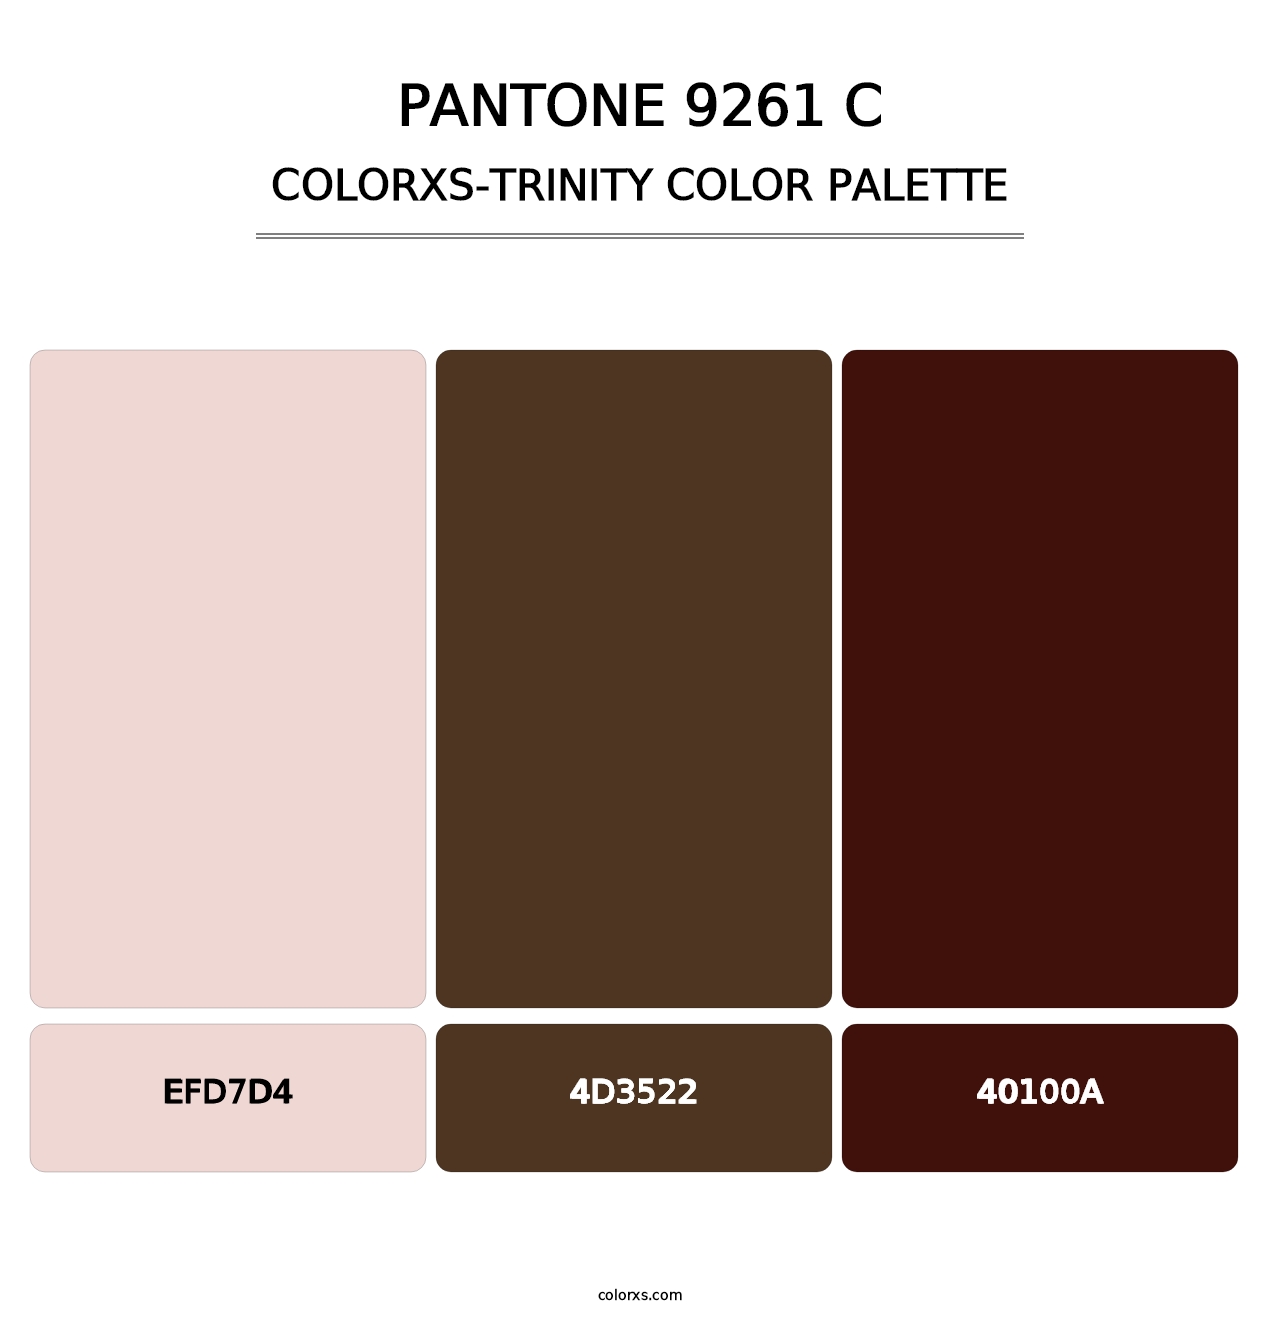 PANTONE 9261 C - Colorxs Trinity Palette